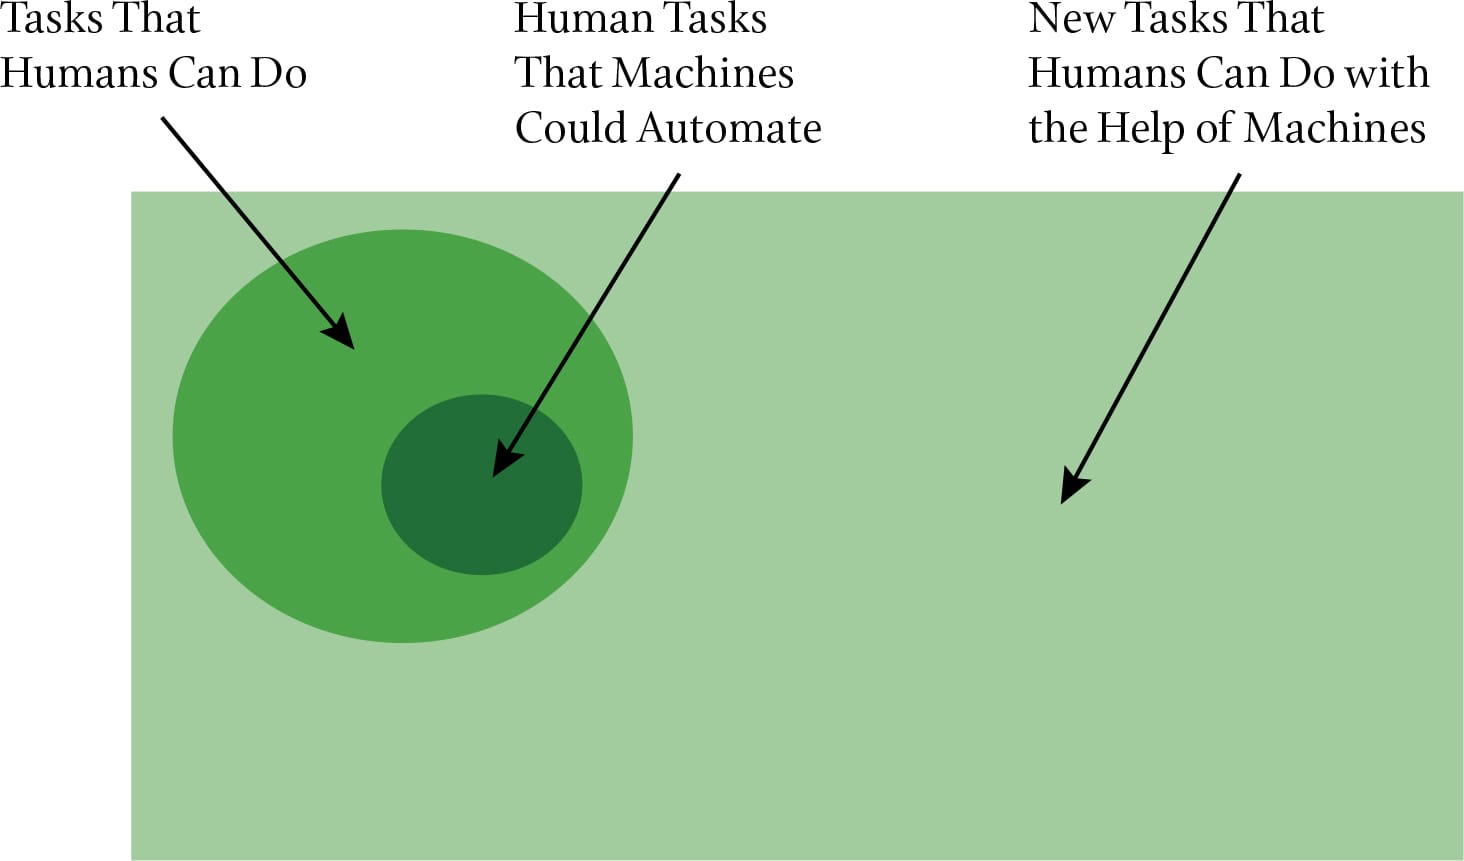 Weeknotes 283 - more or less human through AI?